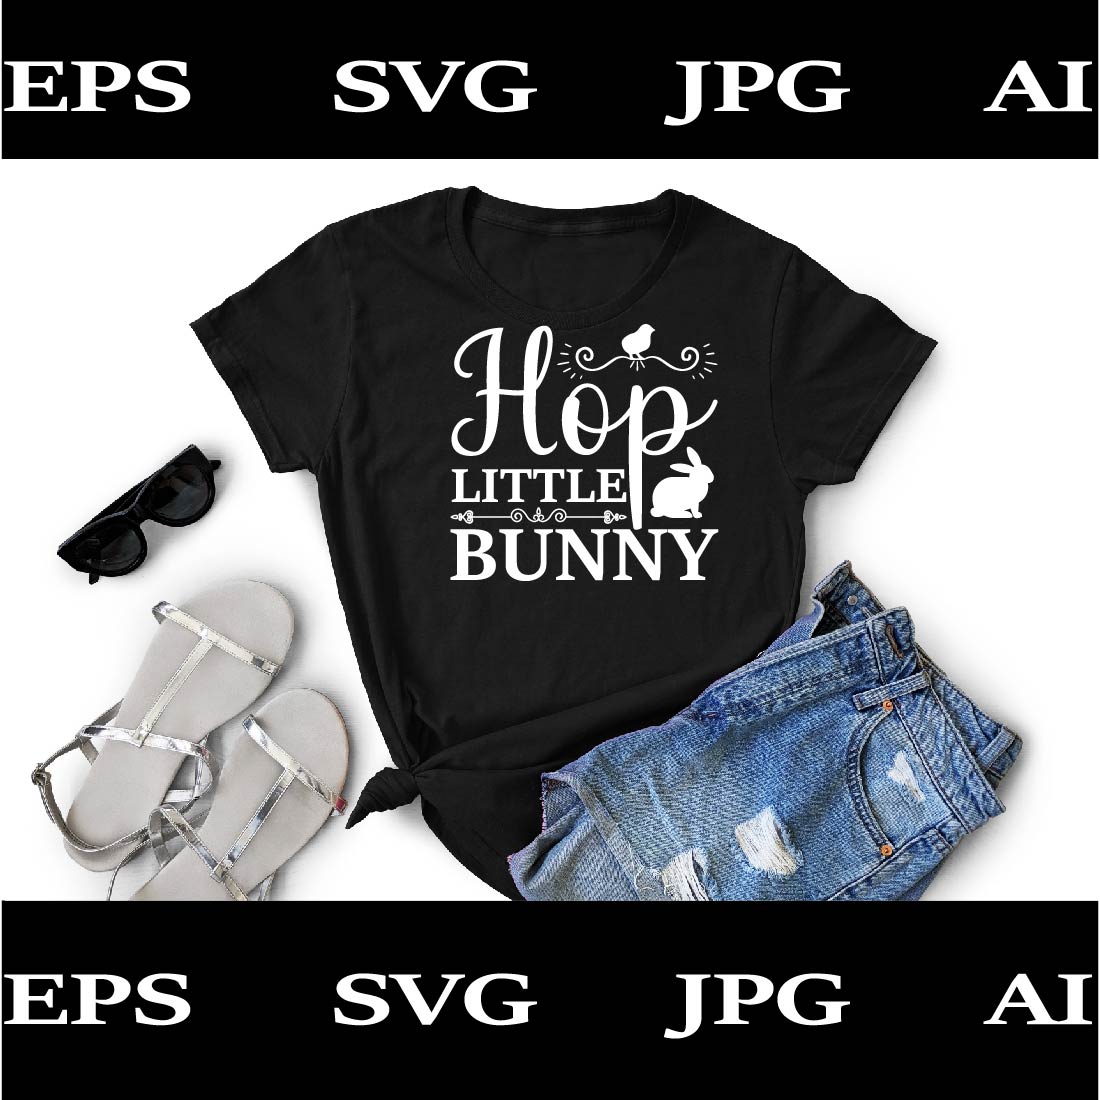 Hop Little Bunny Svg File preview image.